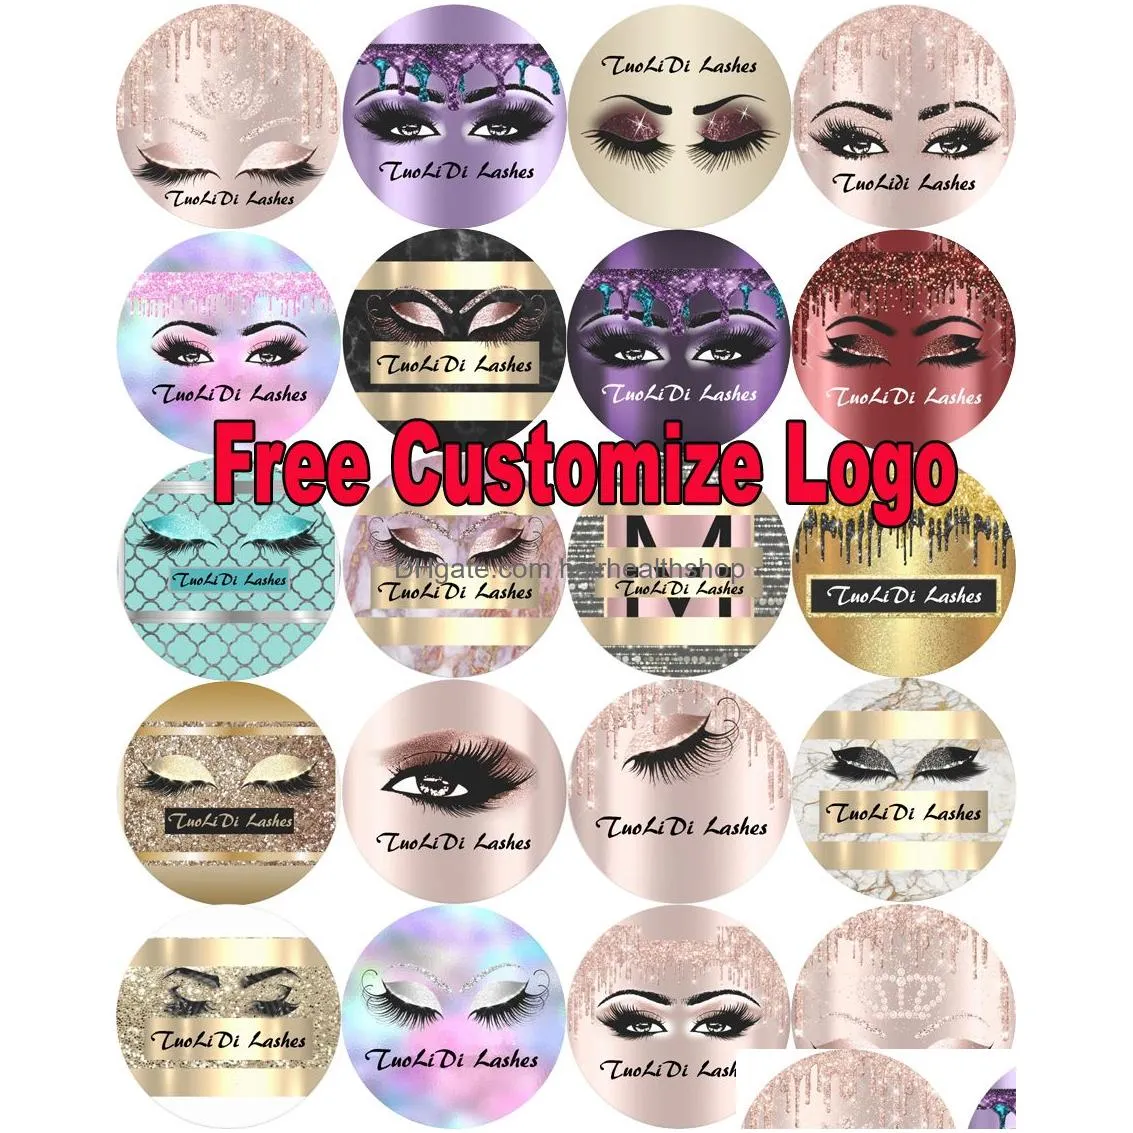 False Eyelashes 100% 3D Mink Makeup Cross False Eyelashes Eye Lashes Extension Handmade Nature 21 Styles For Choose Also Have Magnetic Dhgq4